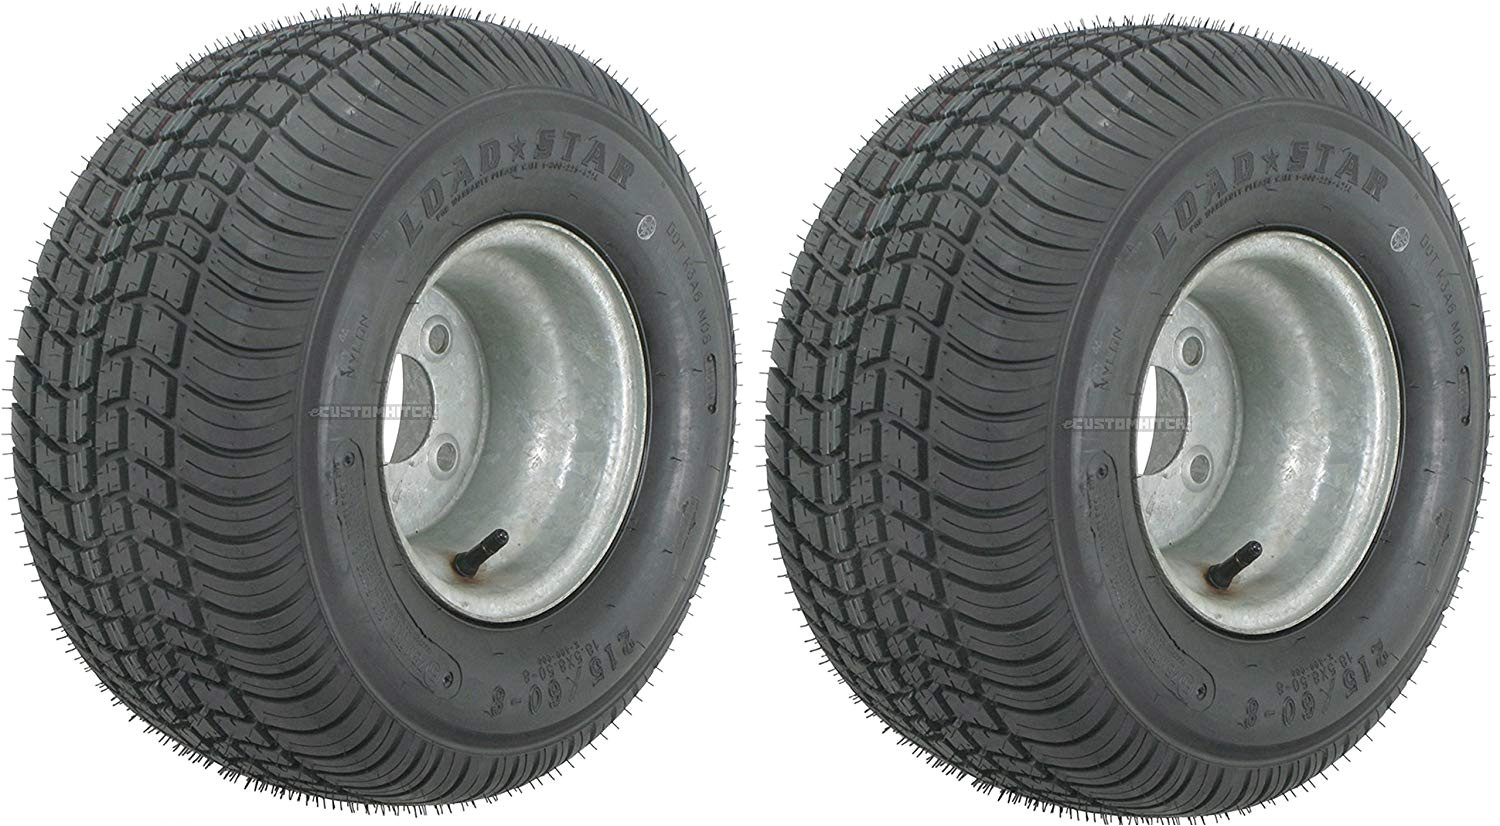 amazon com ecustomrim 2 pack trailer tires on galvanized rims 18 5 8 5 8 215 60 8 load c 4 lug automotive